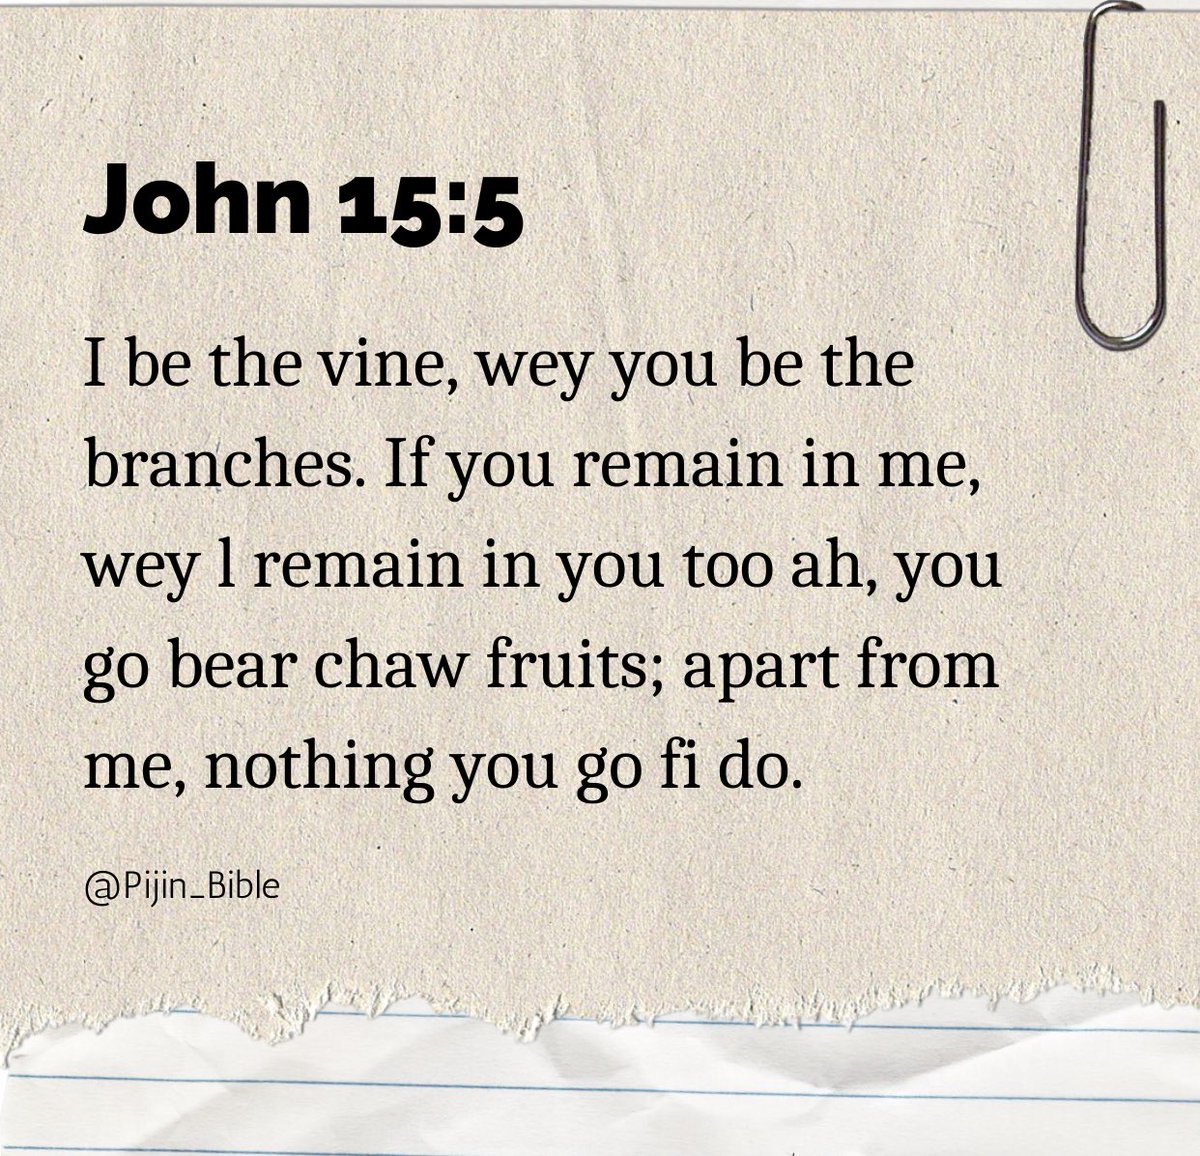 John 15:5
#PijinBible